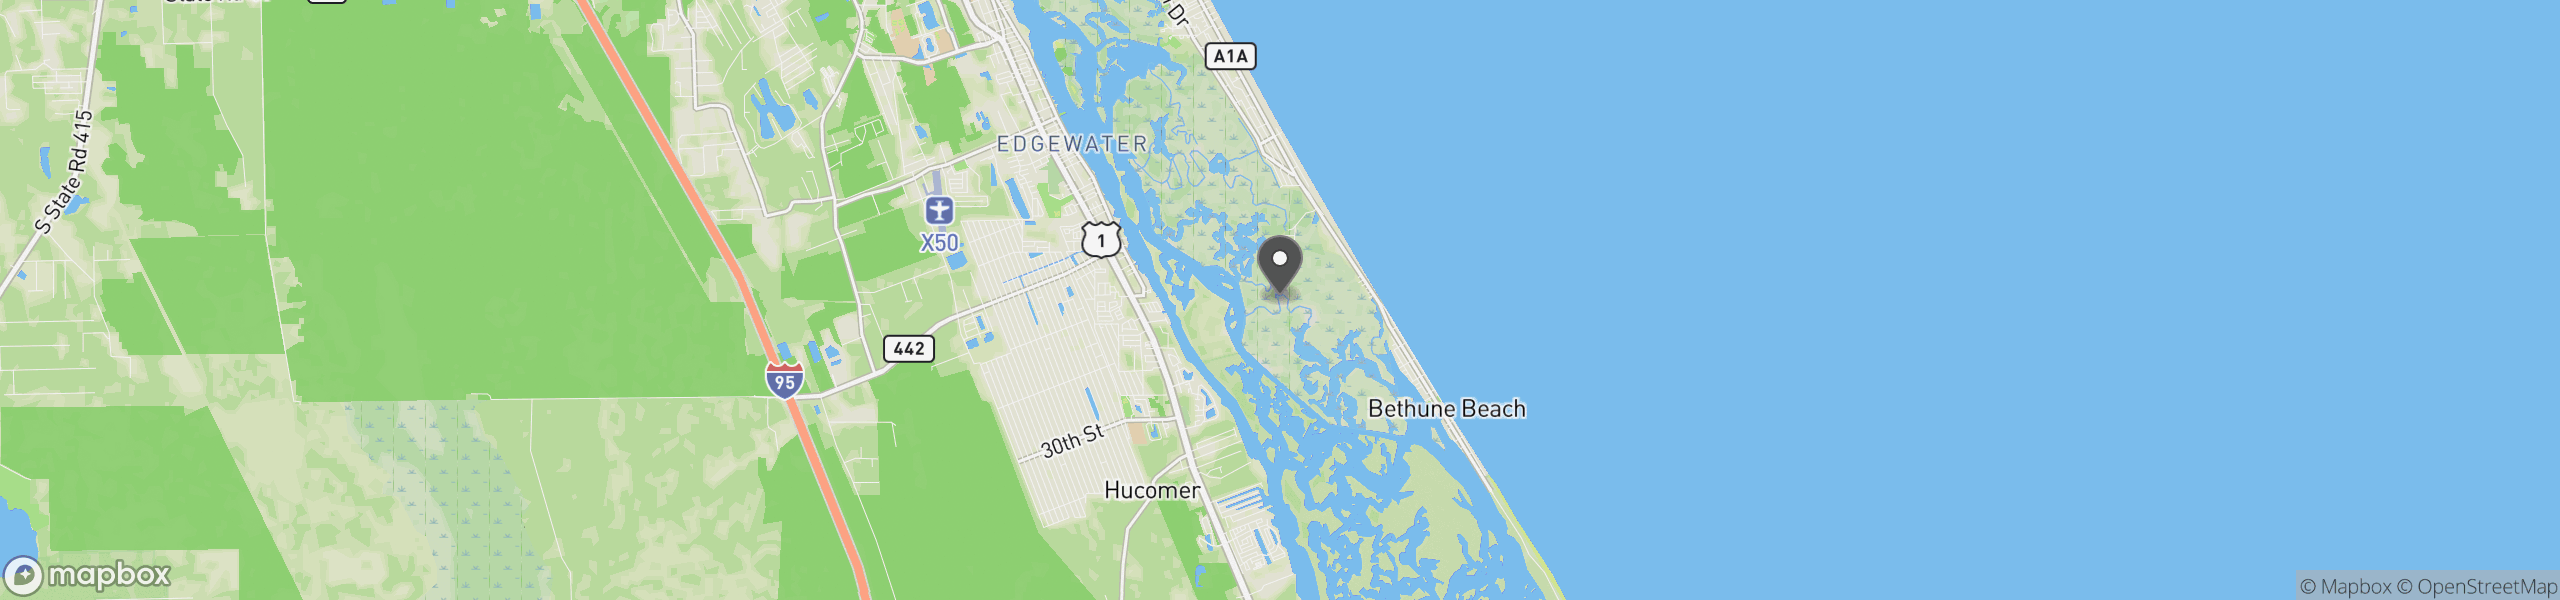 New Smyrna Beach, FL 32169